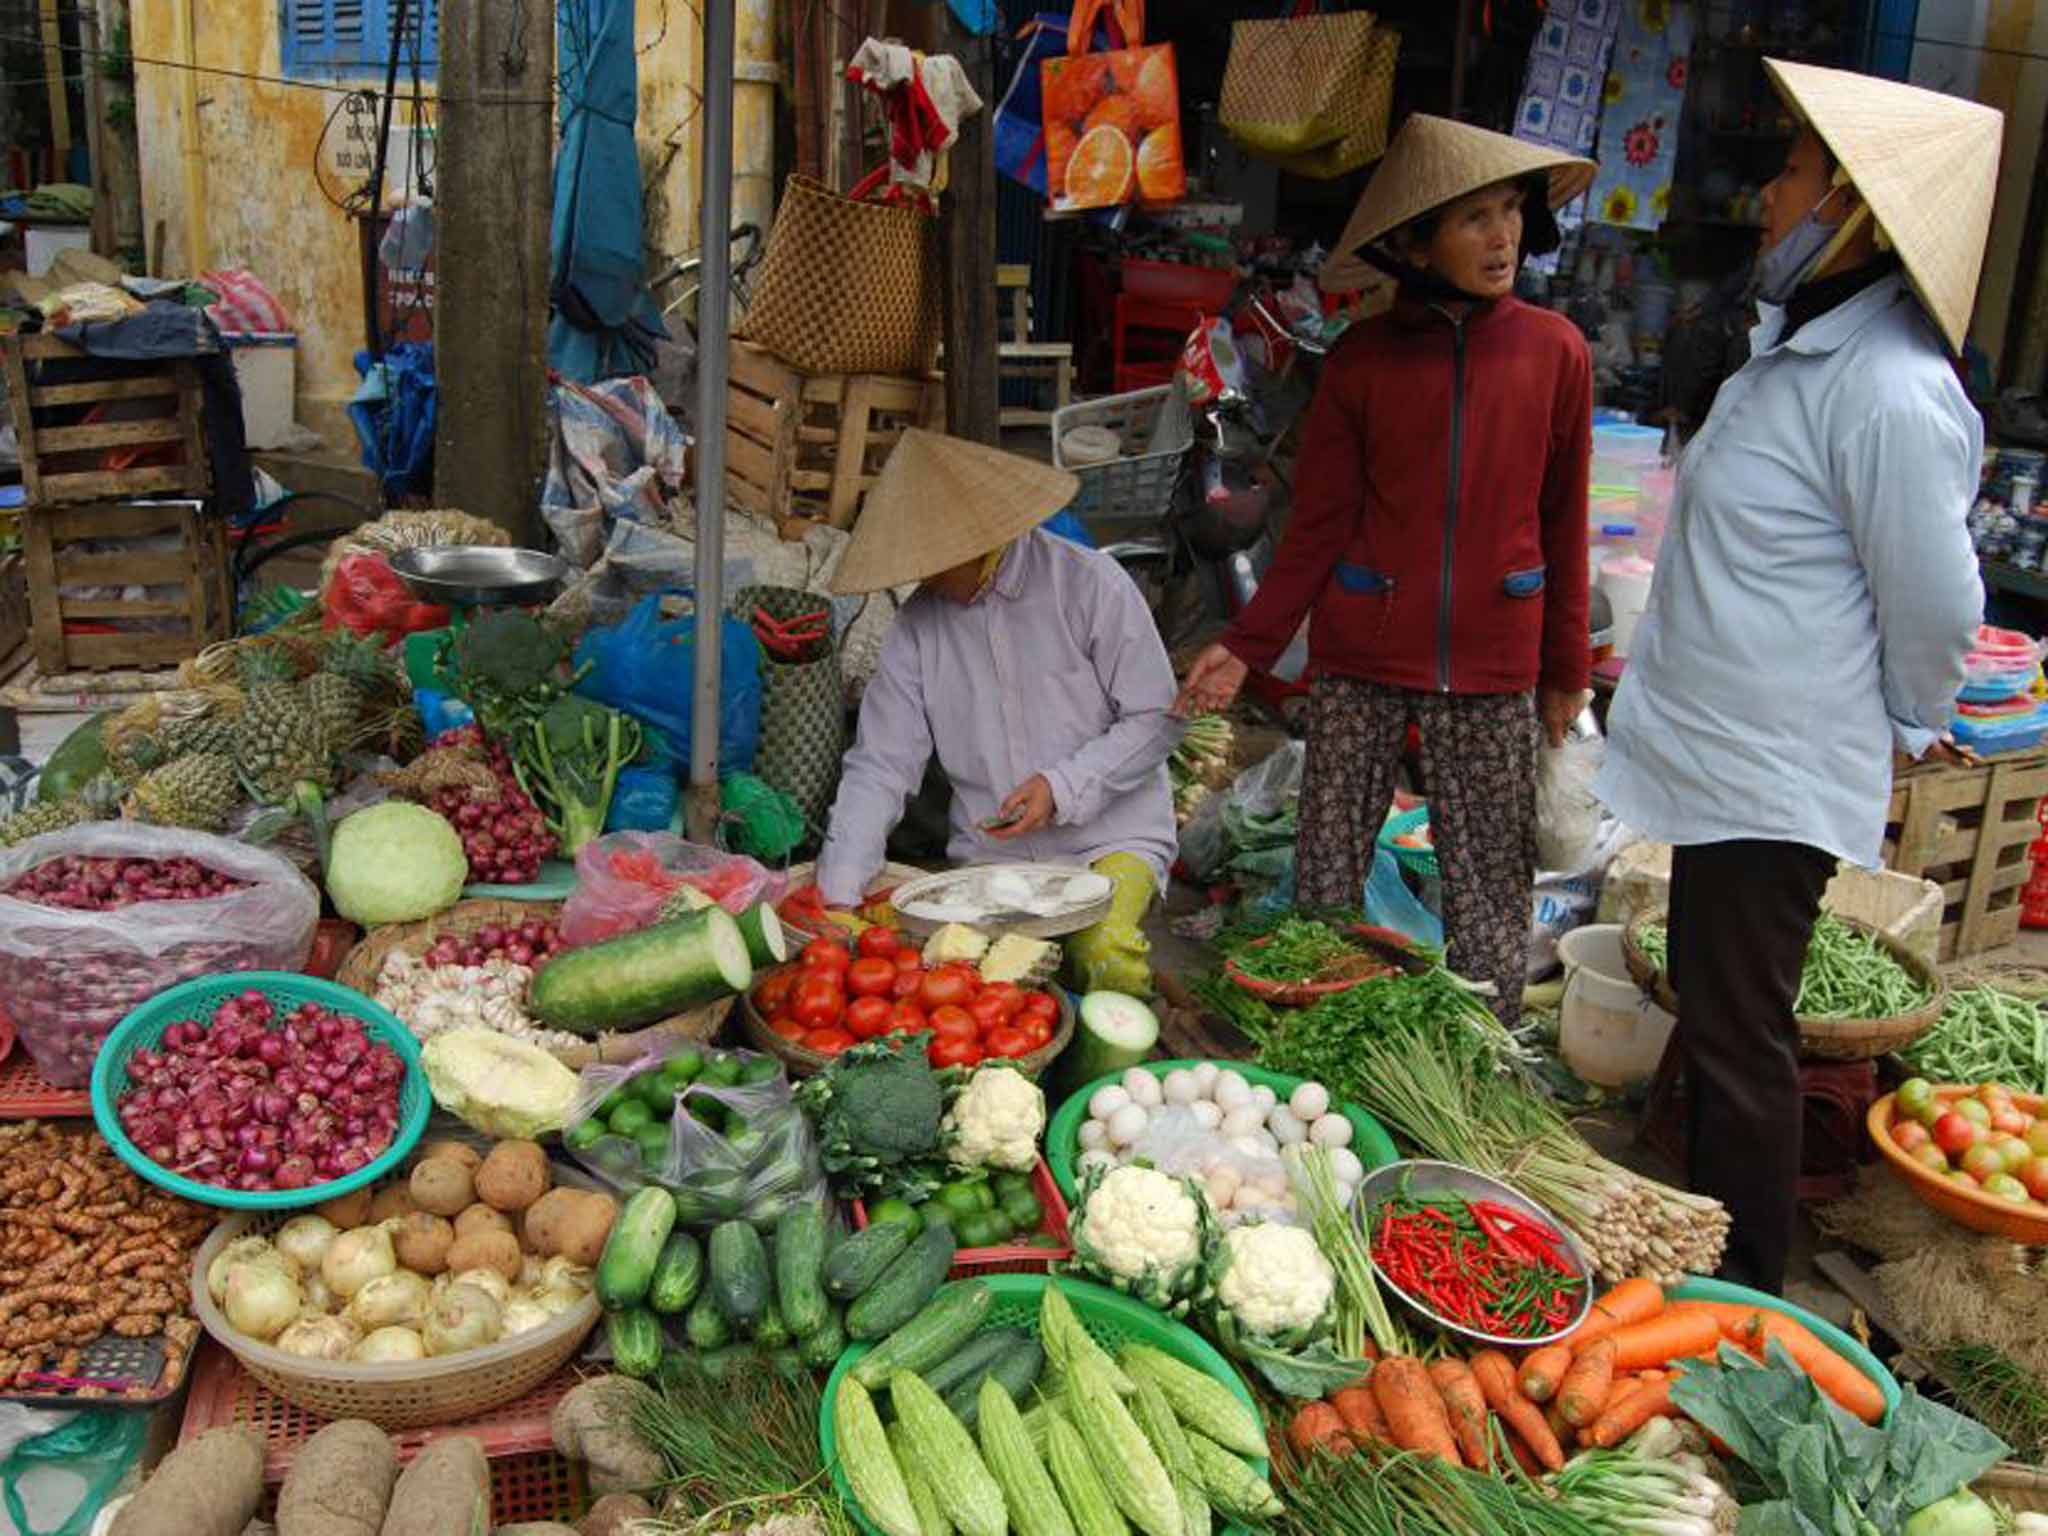 The Hoi An vegetable market